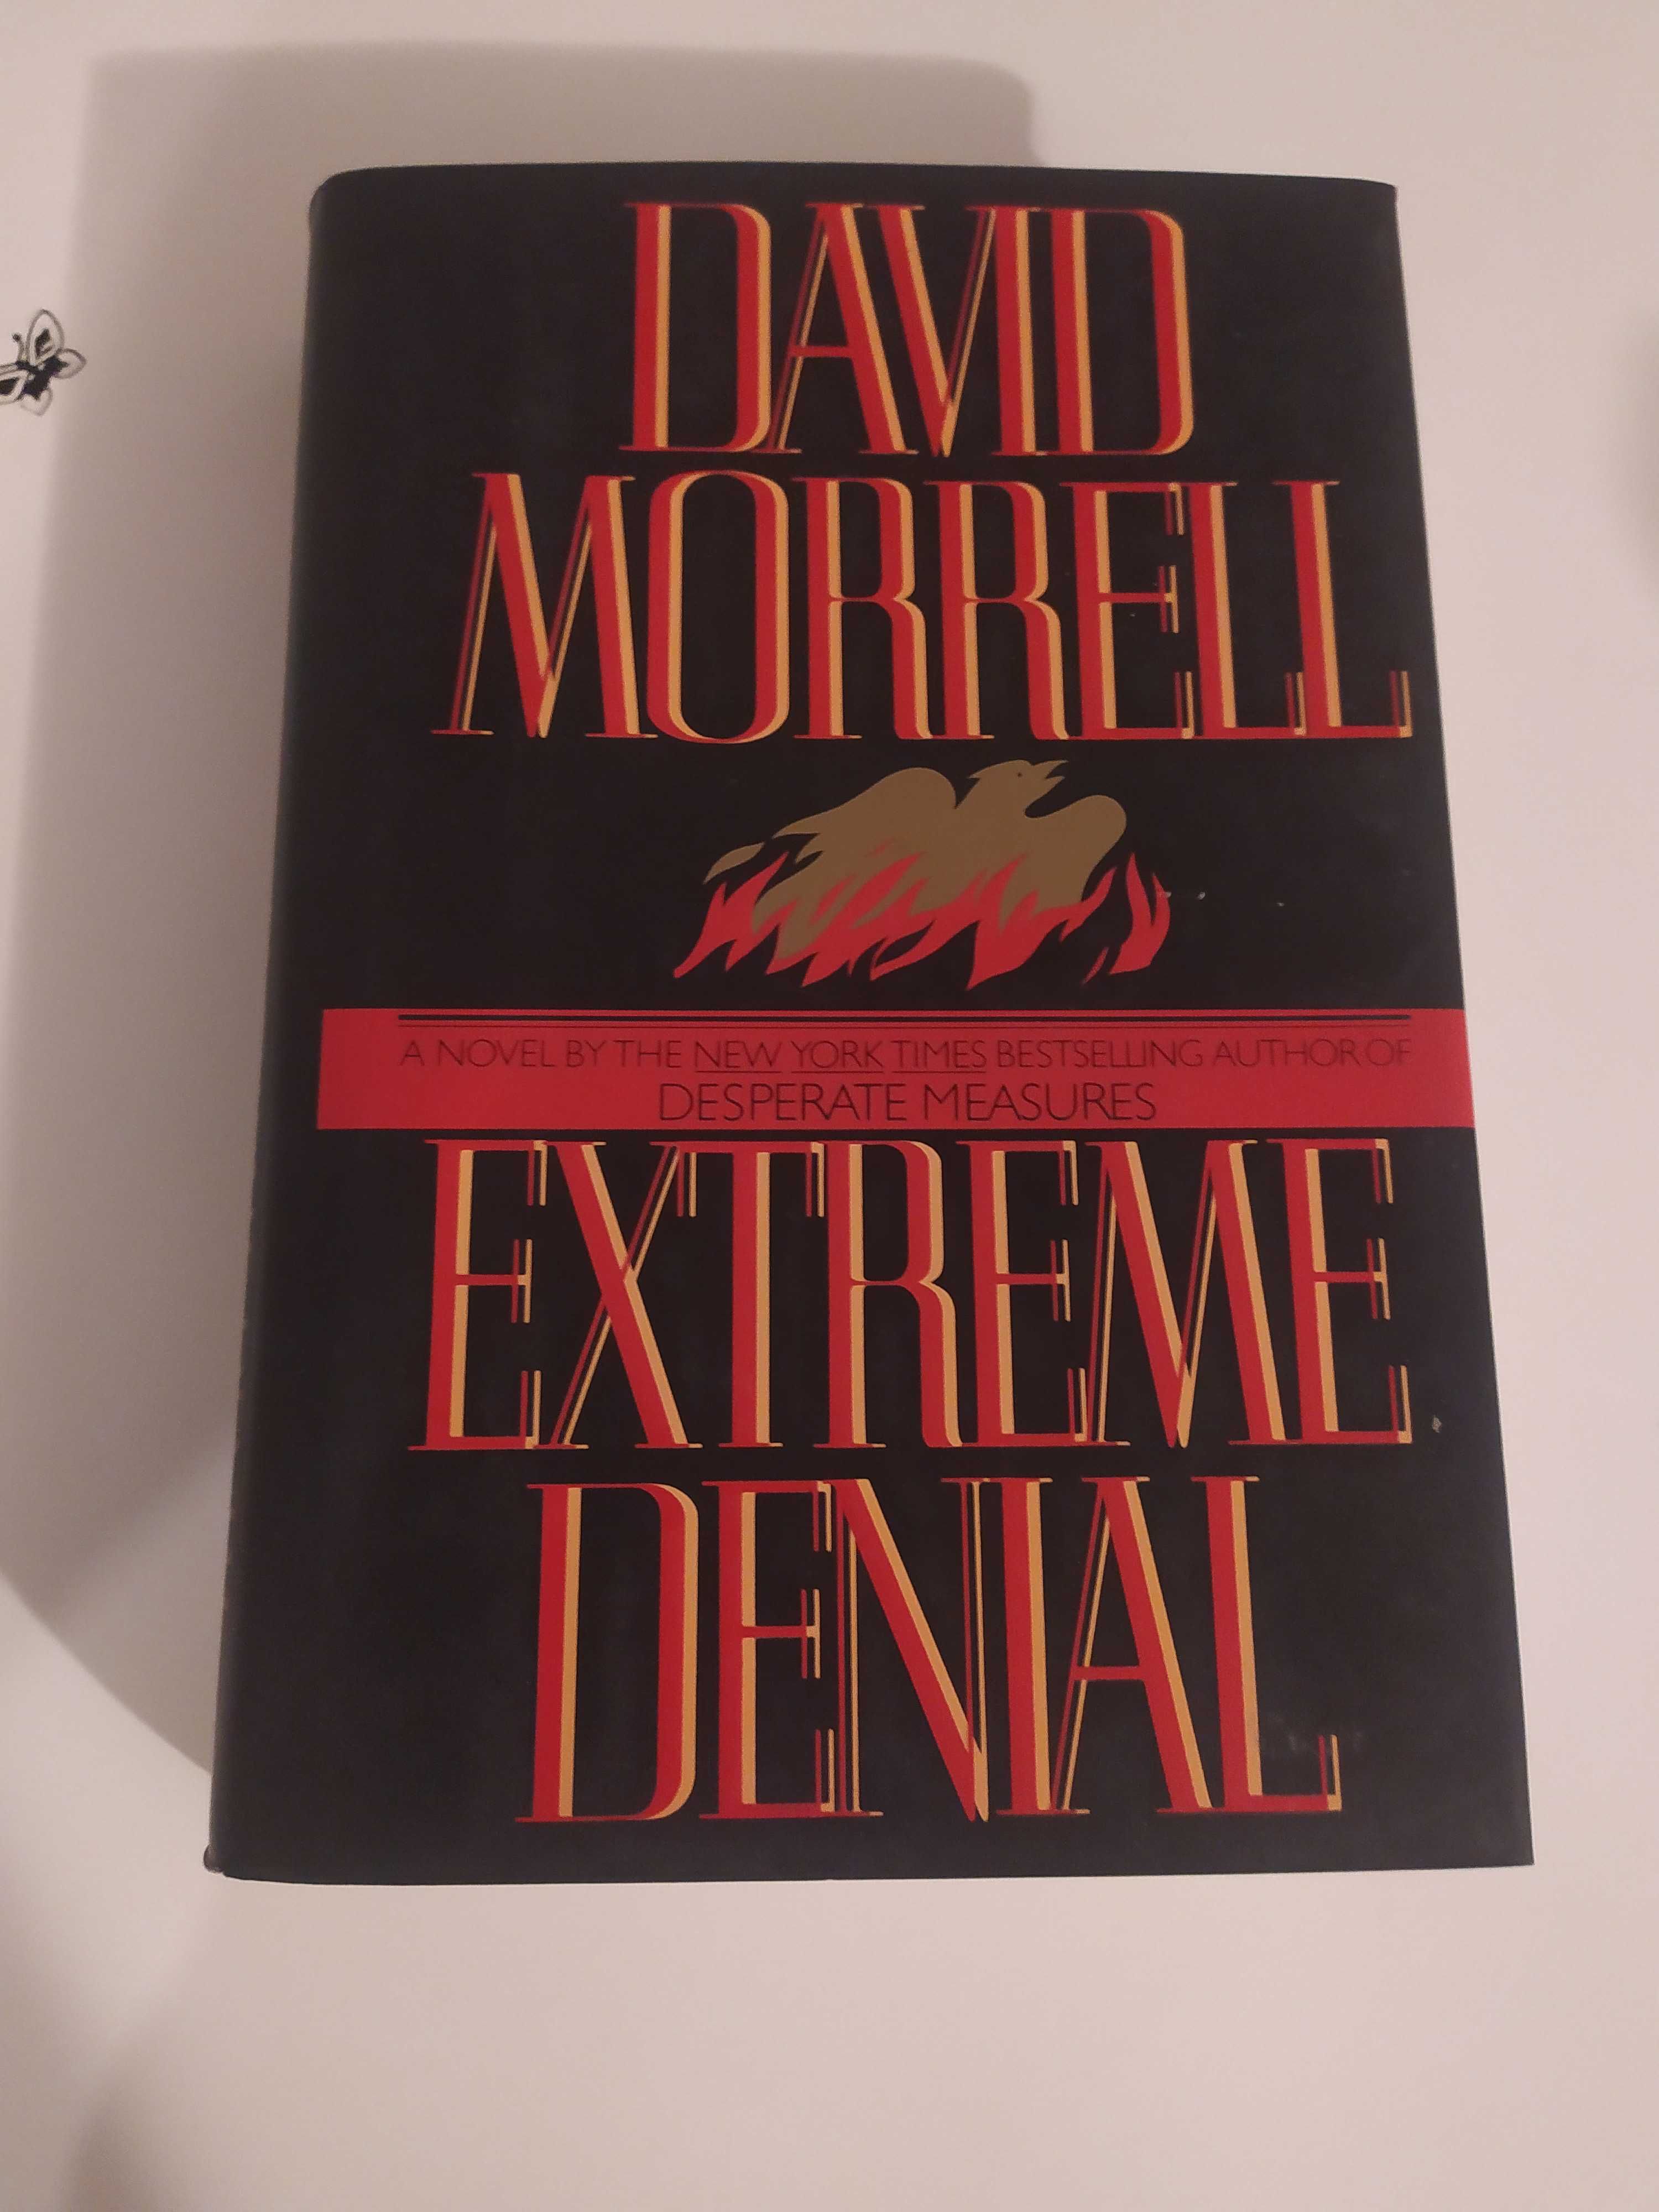 David Morrell ## Extreme denial ## Thriller